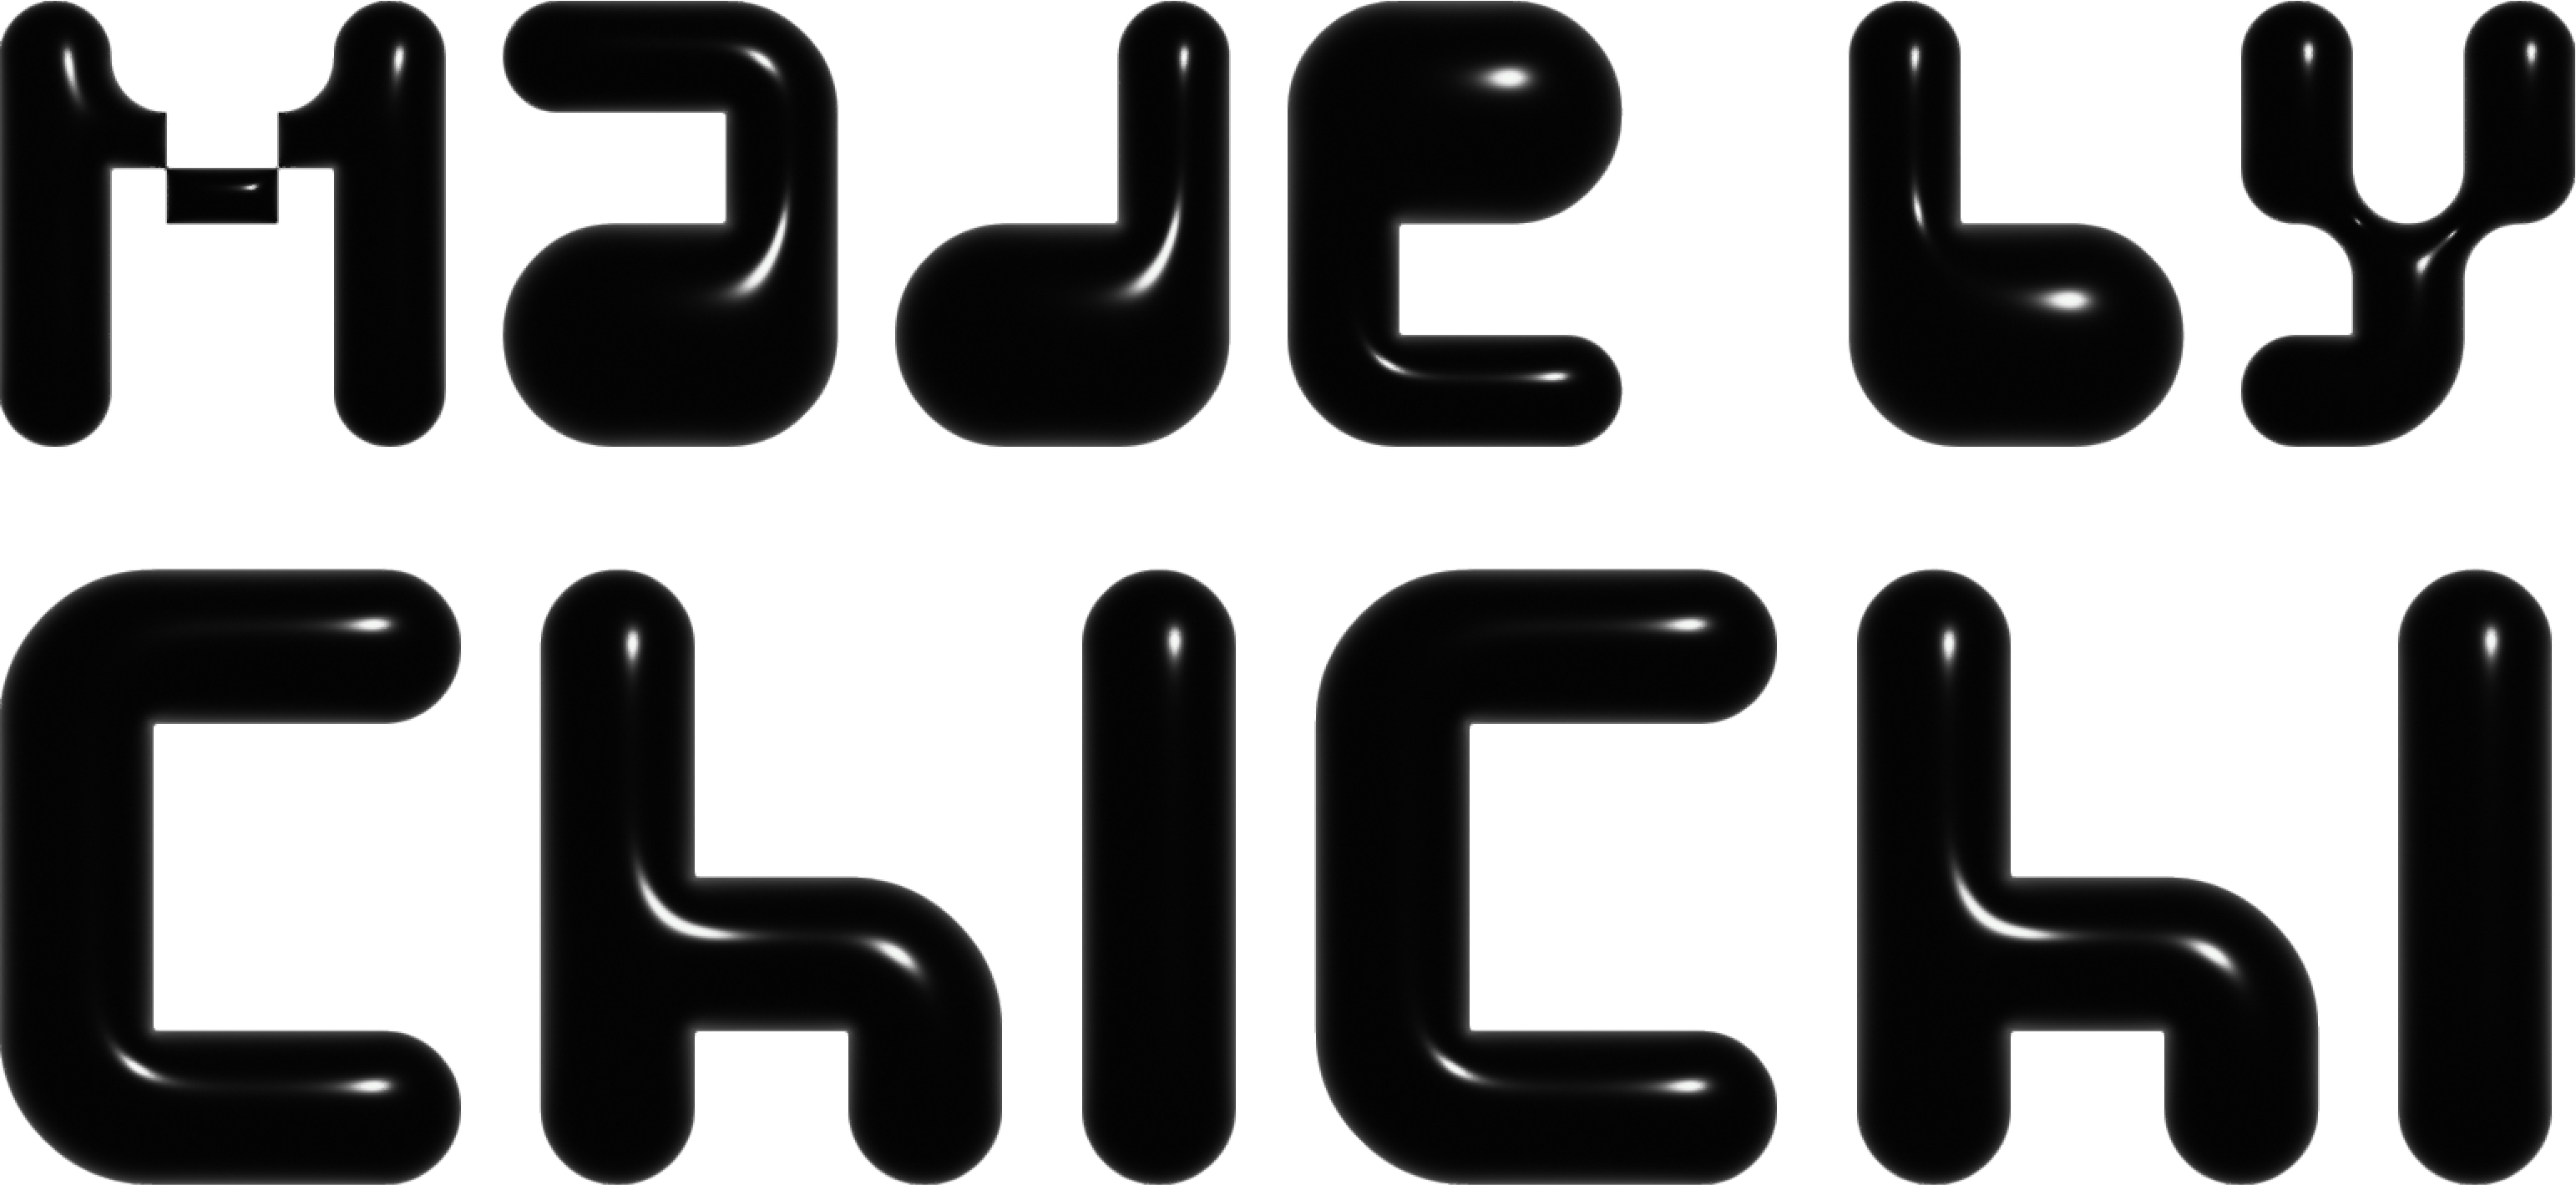 Made by Chichi - glossy logo in black